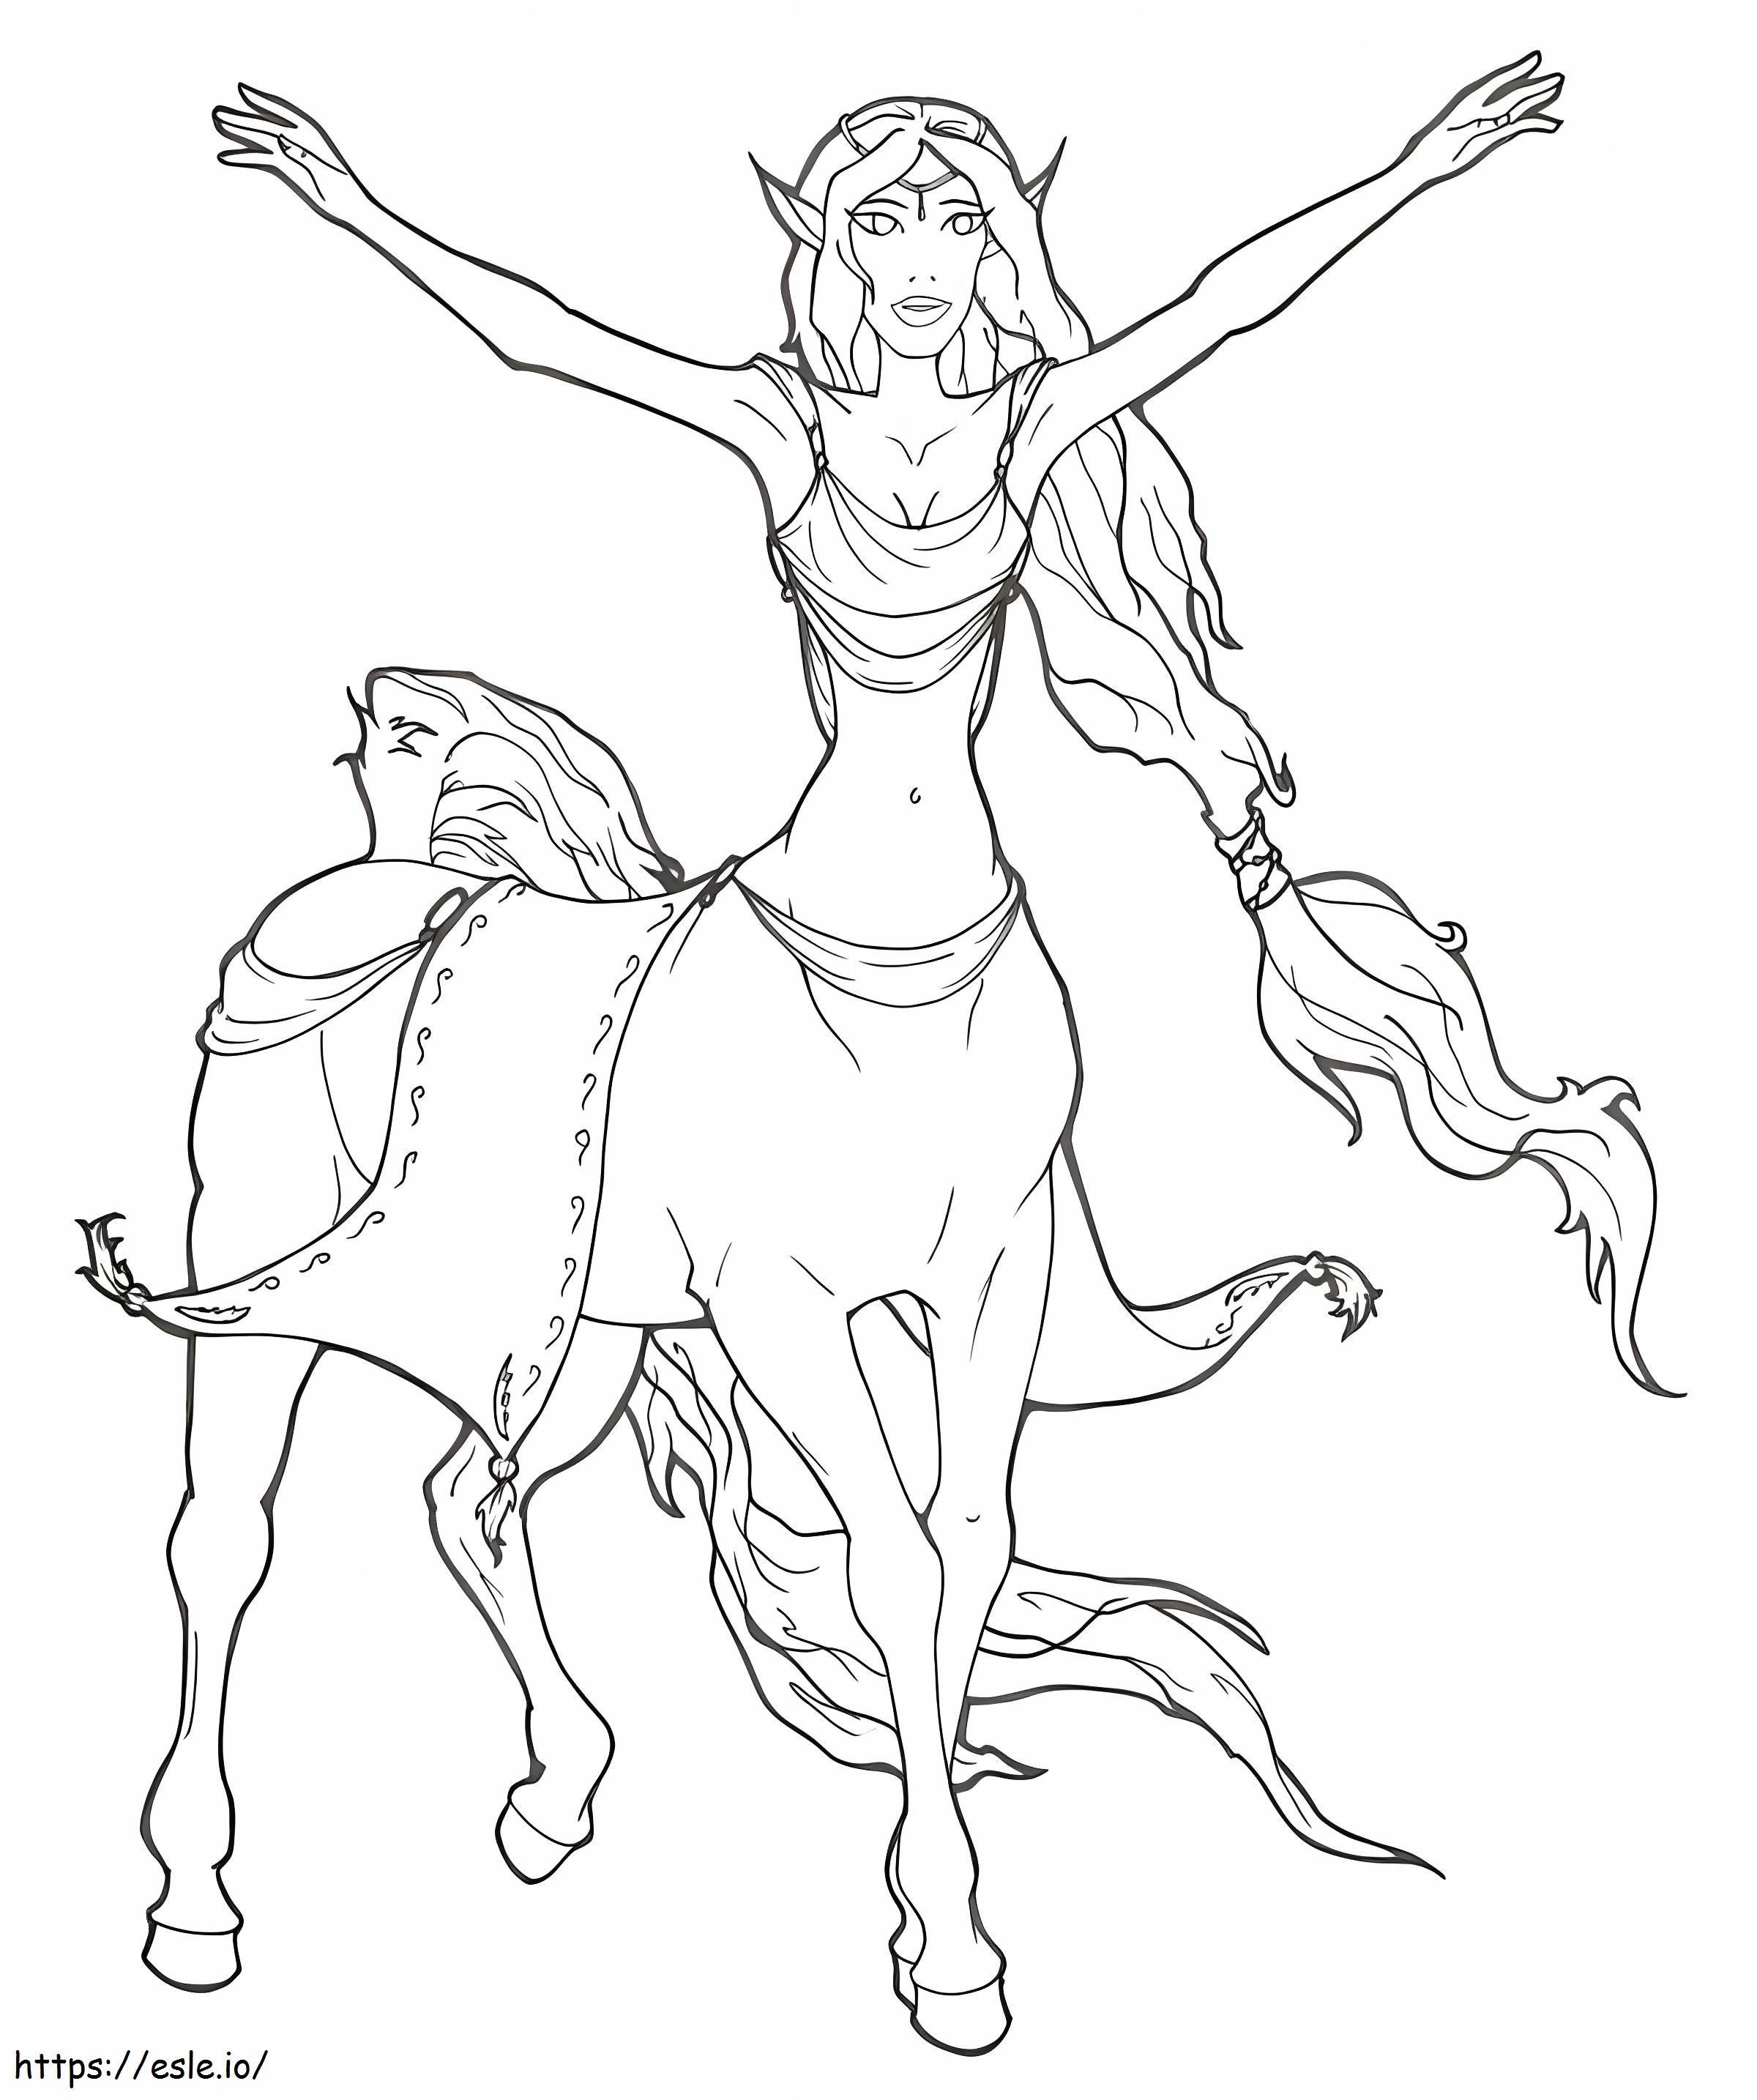 Lady Centaur coloring page